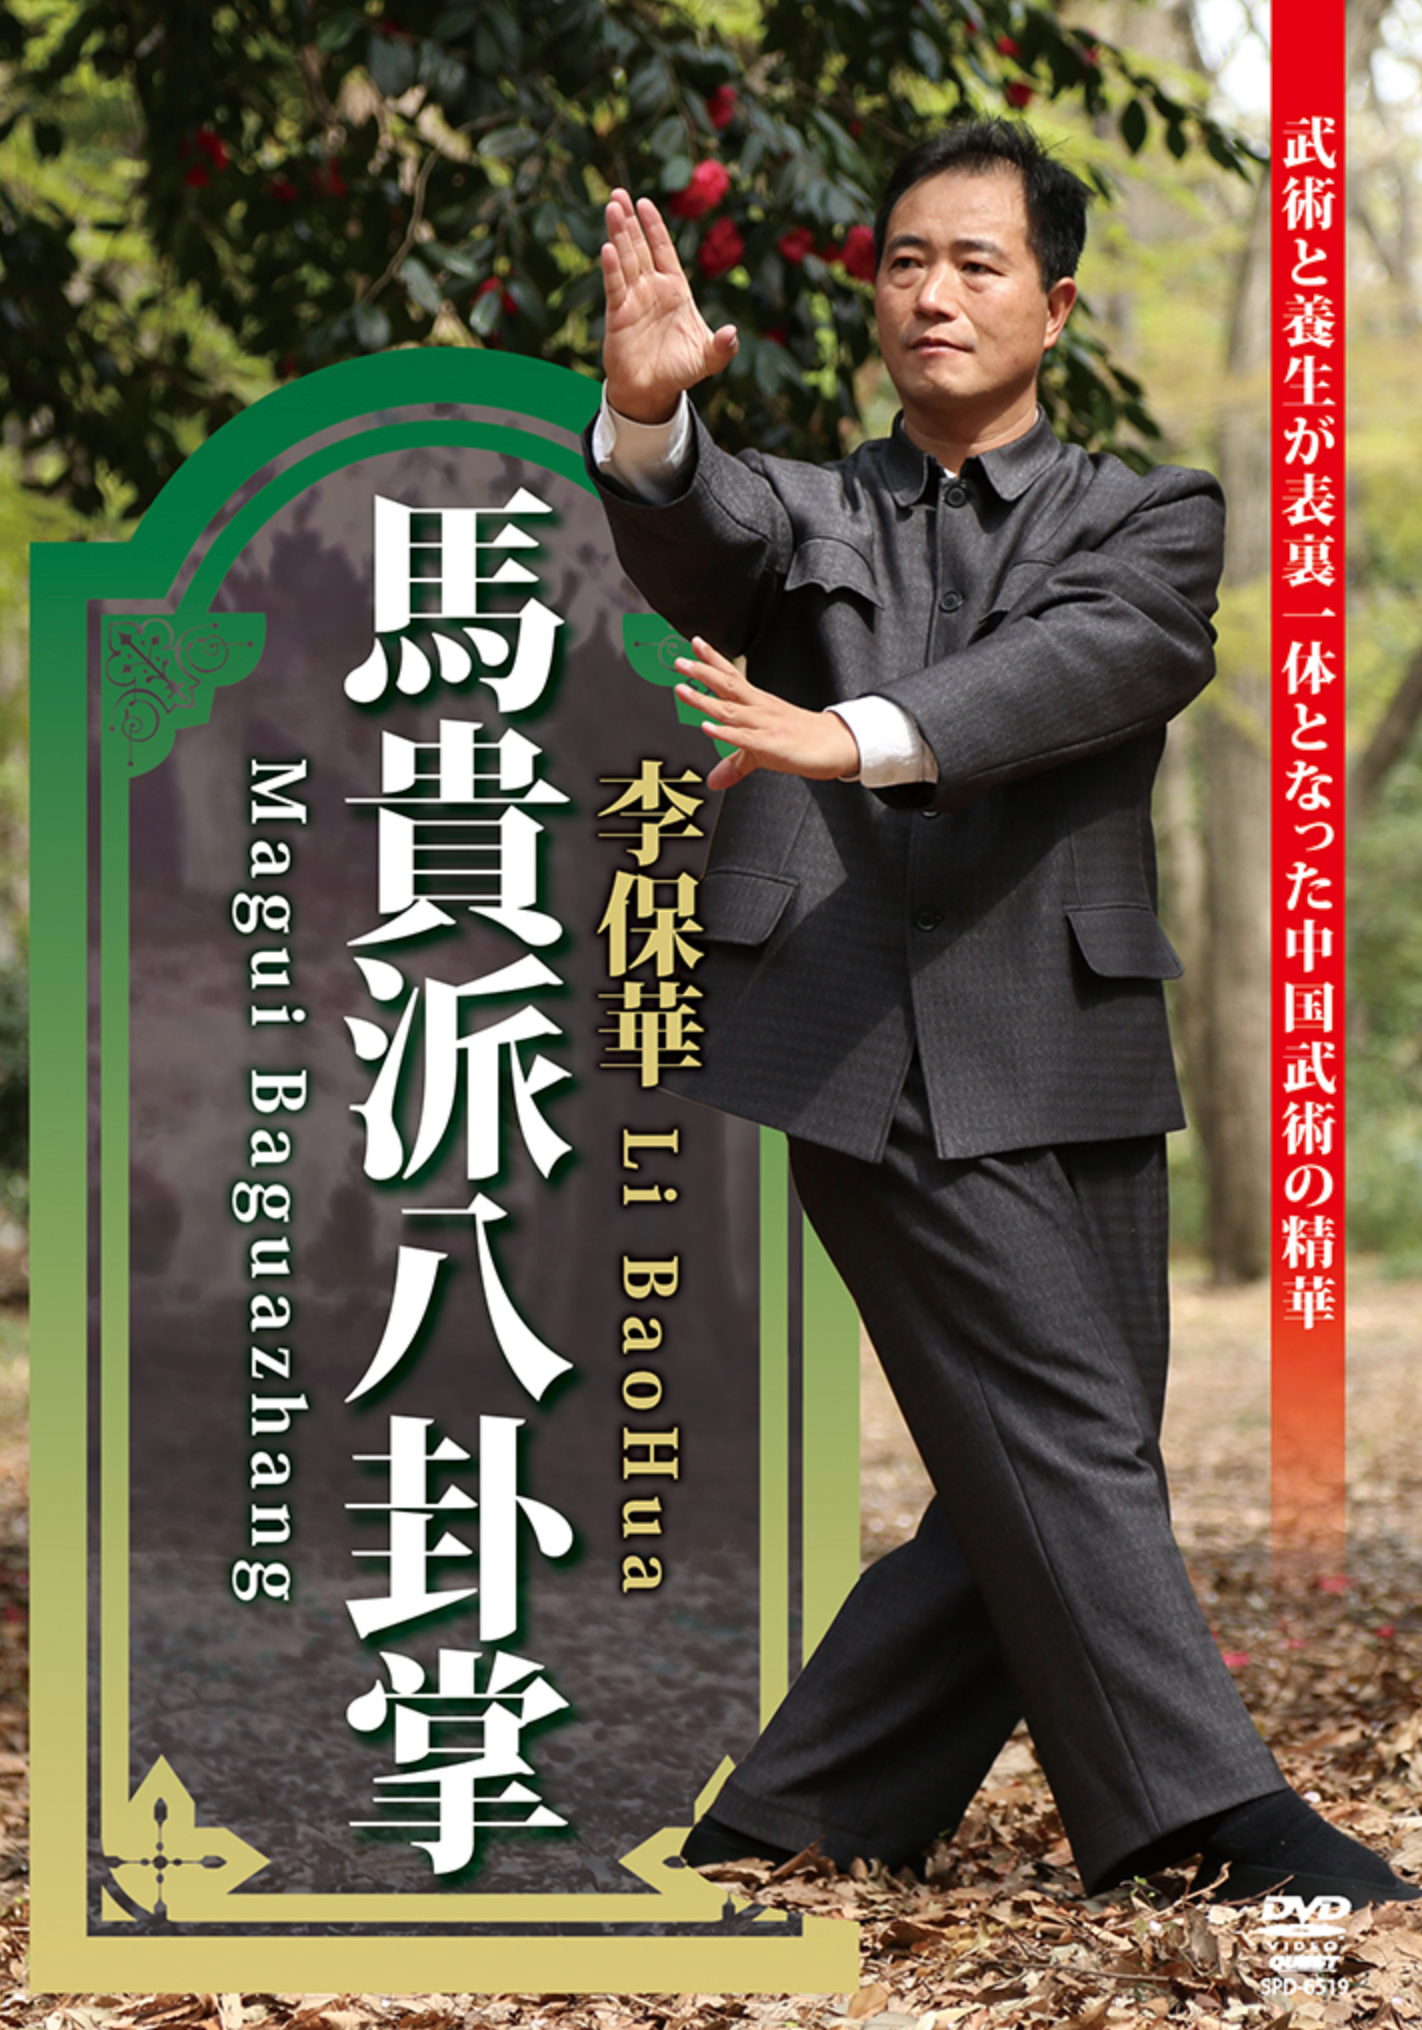 Magui Baguazhang Vol 1 DVD by Li BaoHua - Budovideos Inc